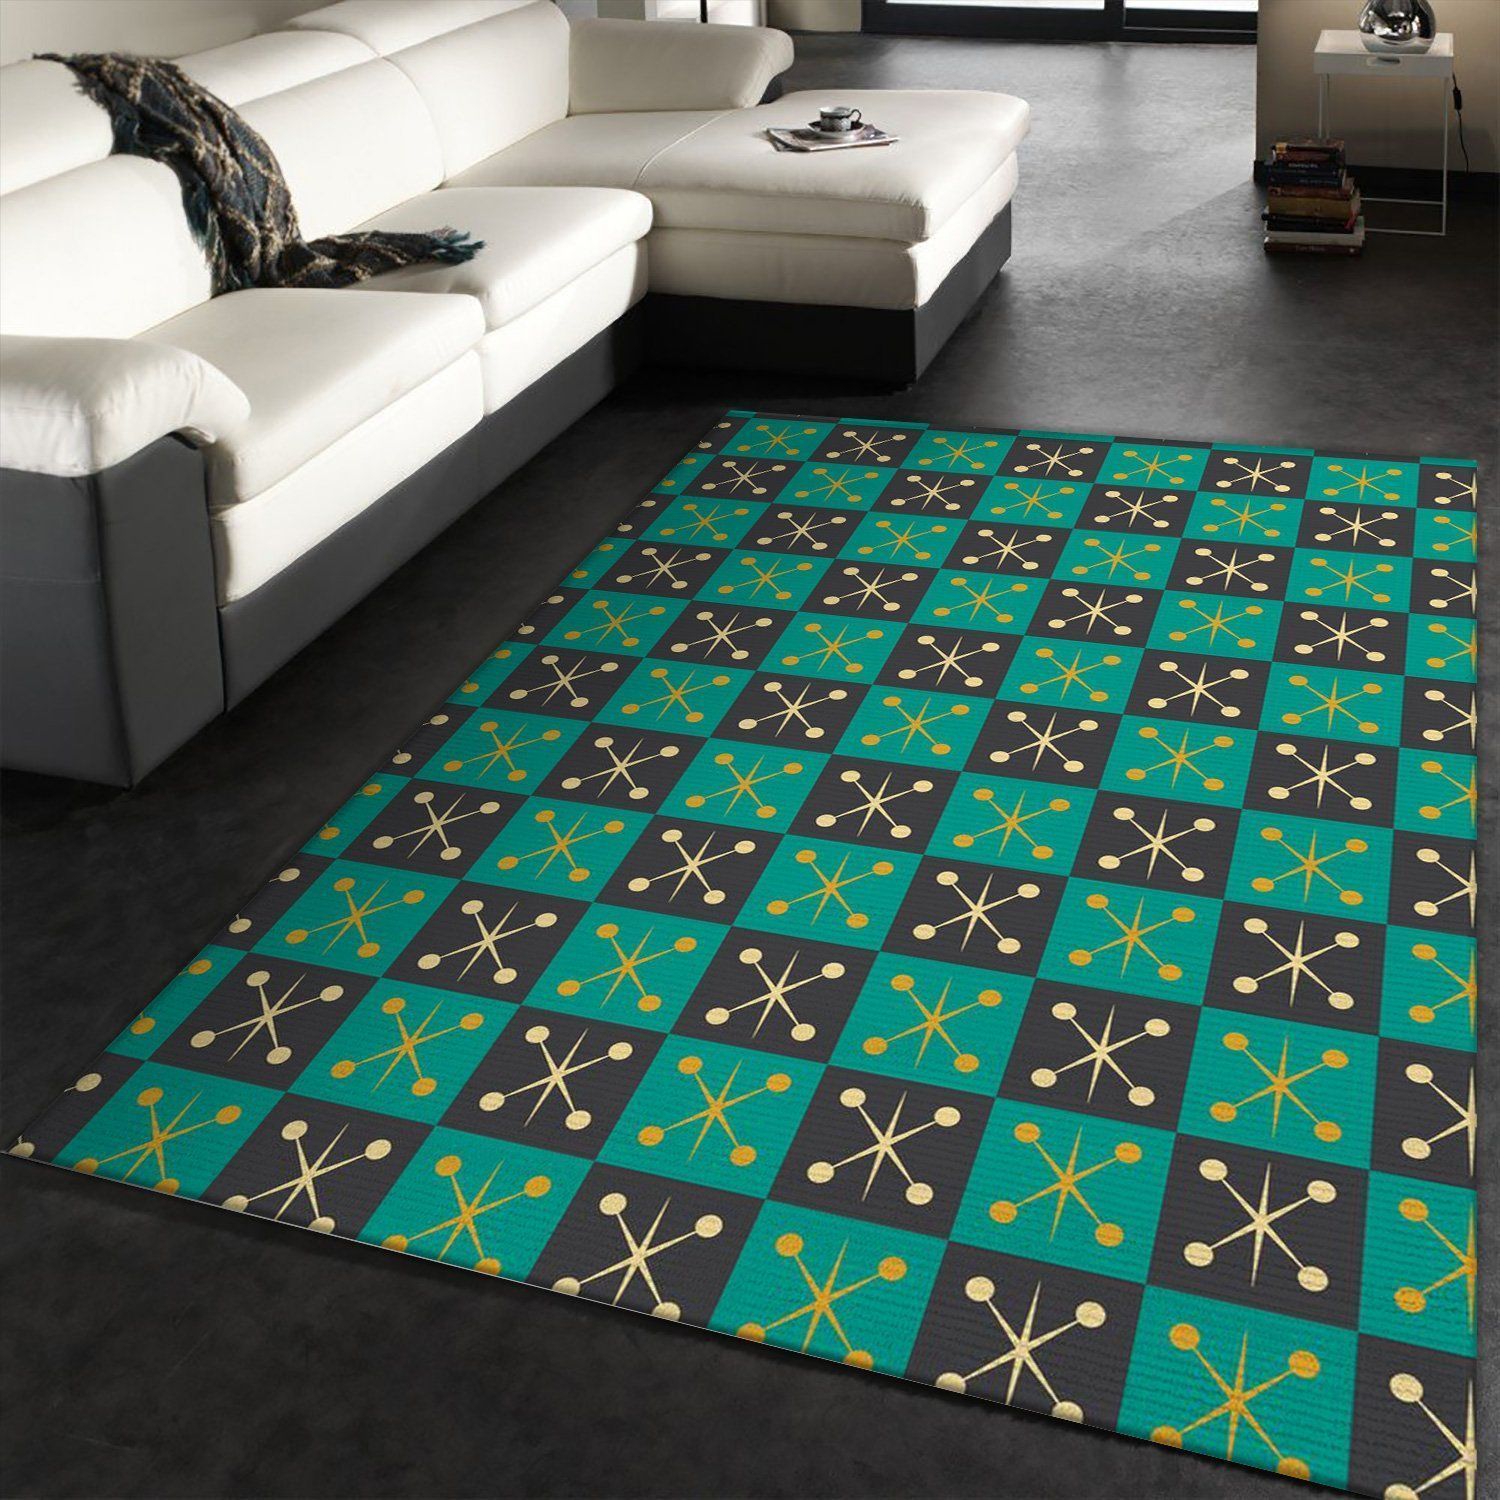 Midcentury Pattern 62 Area Rug Carpet, Living room and bedroom Rug, Home Decor Floor Decor - Indoor Outdoor Rugs